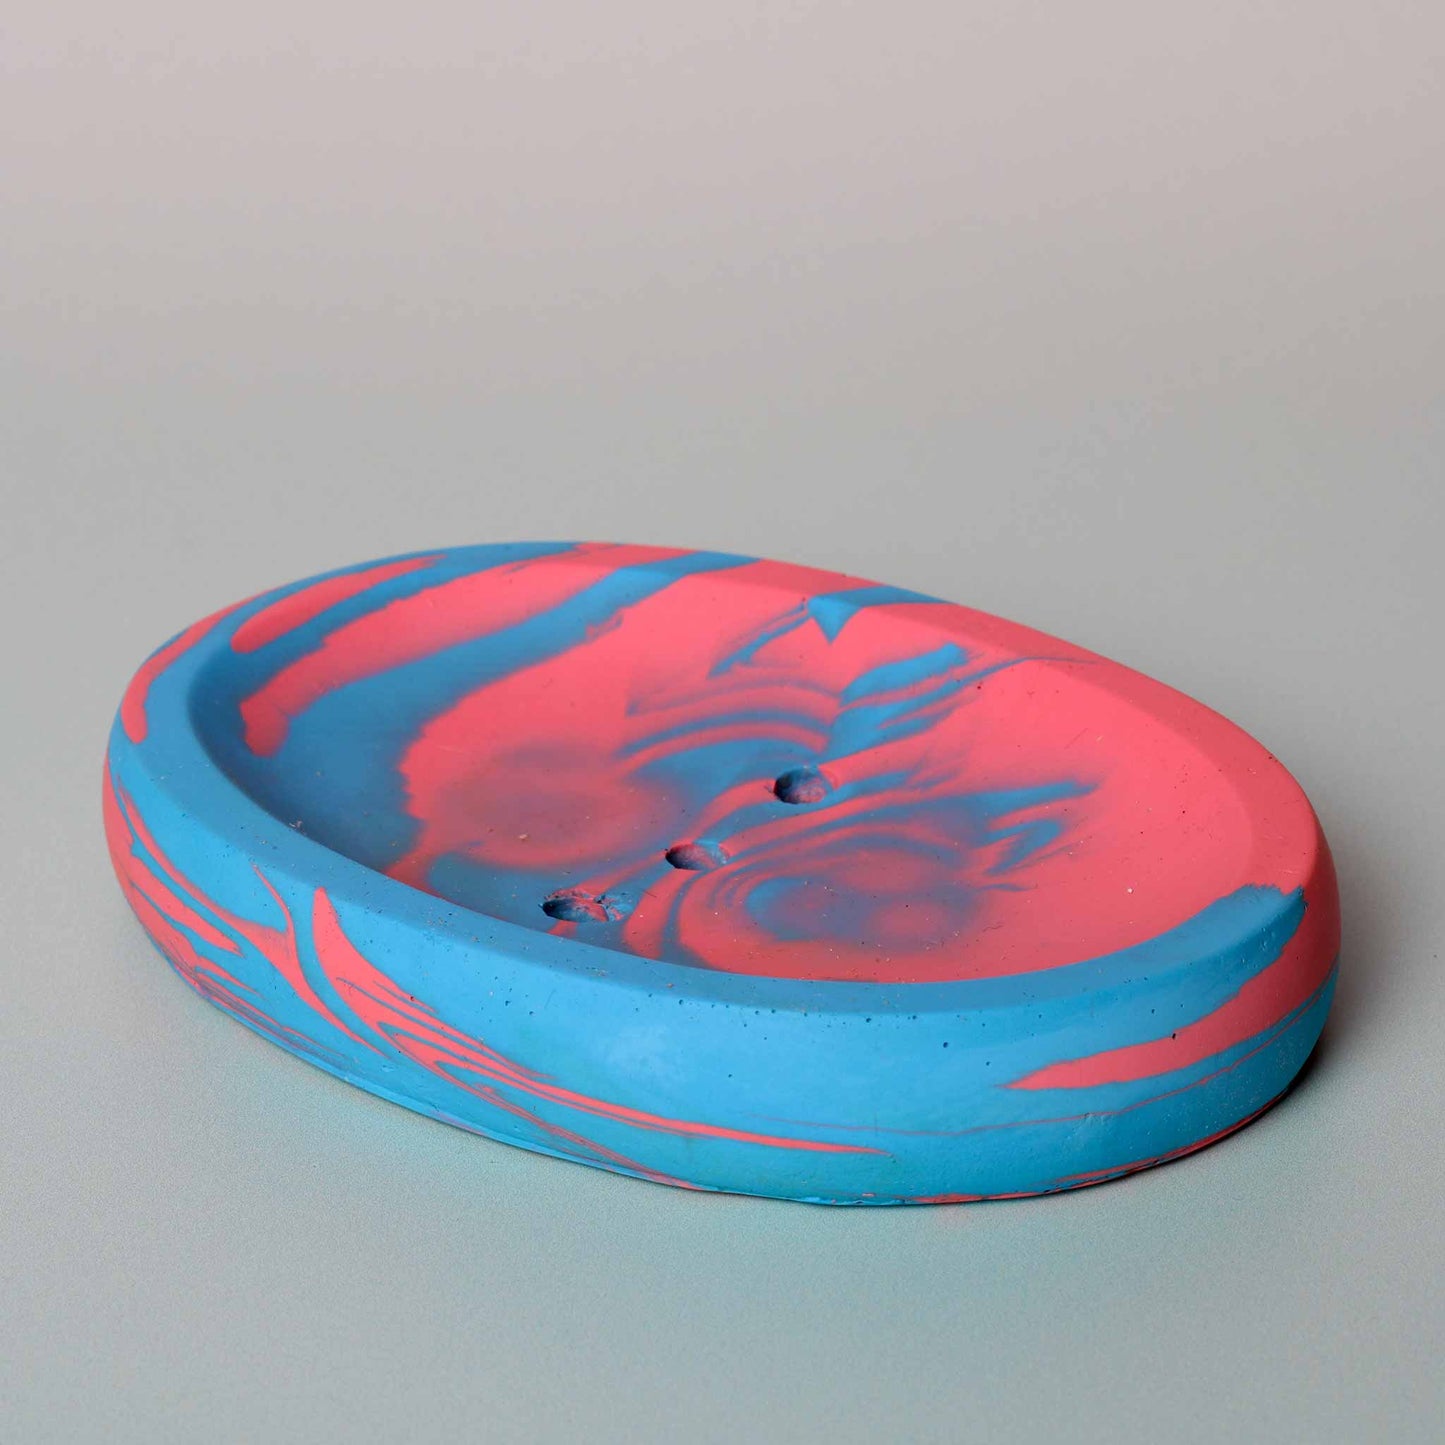 Gorgeous handmade eco-friendly Jesmonite pink and blue soap dish